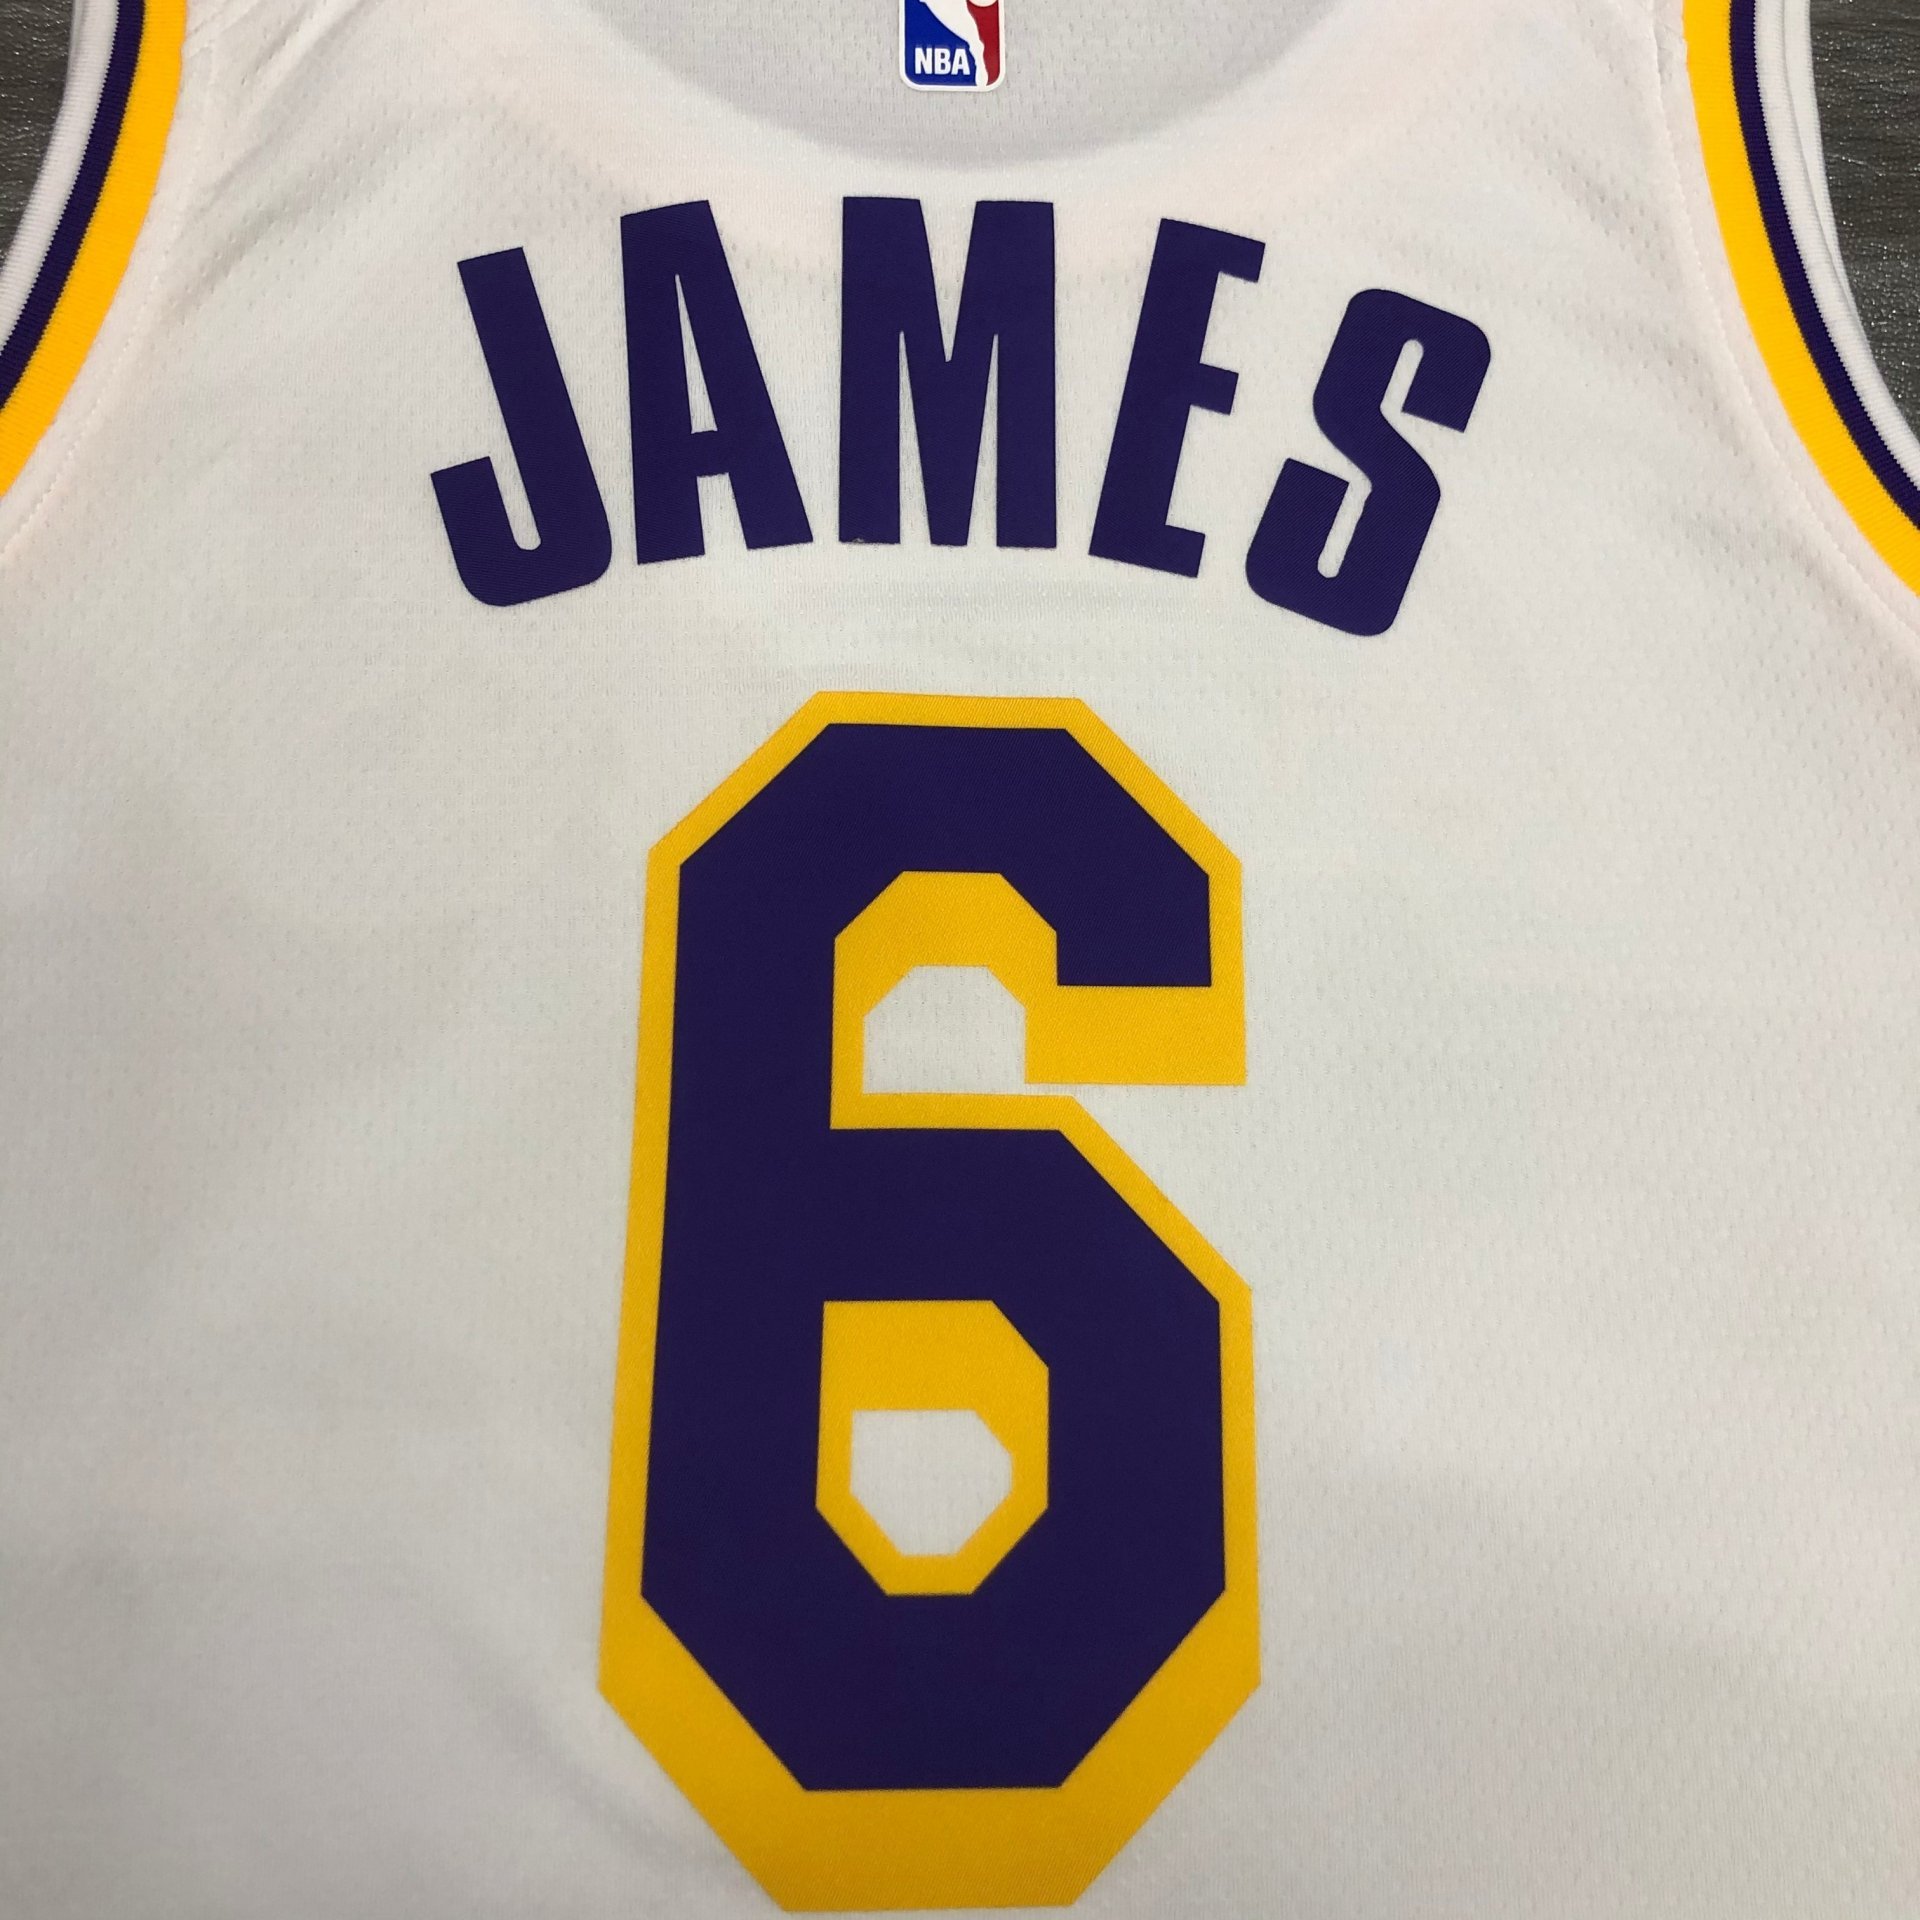 Lebron James - Los Angeles Lakers #6 *Black Mamba* - JerseyAve